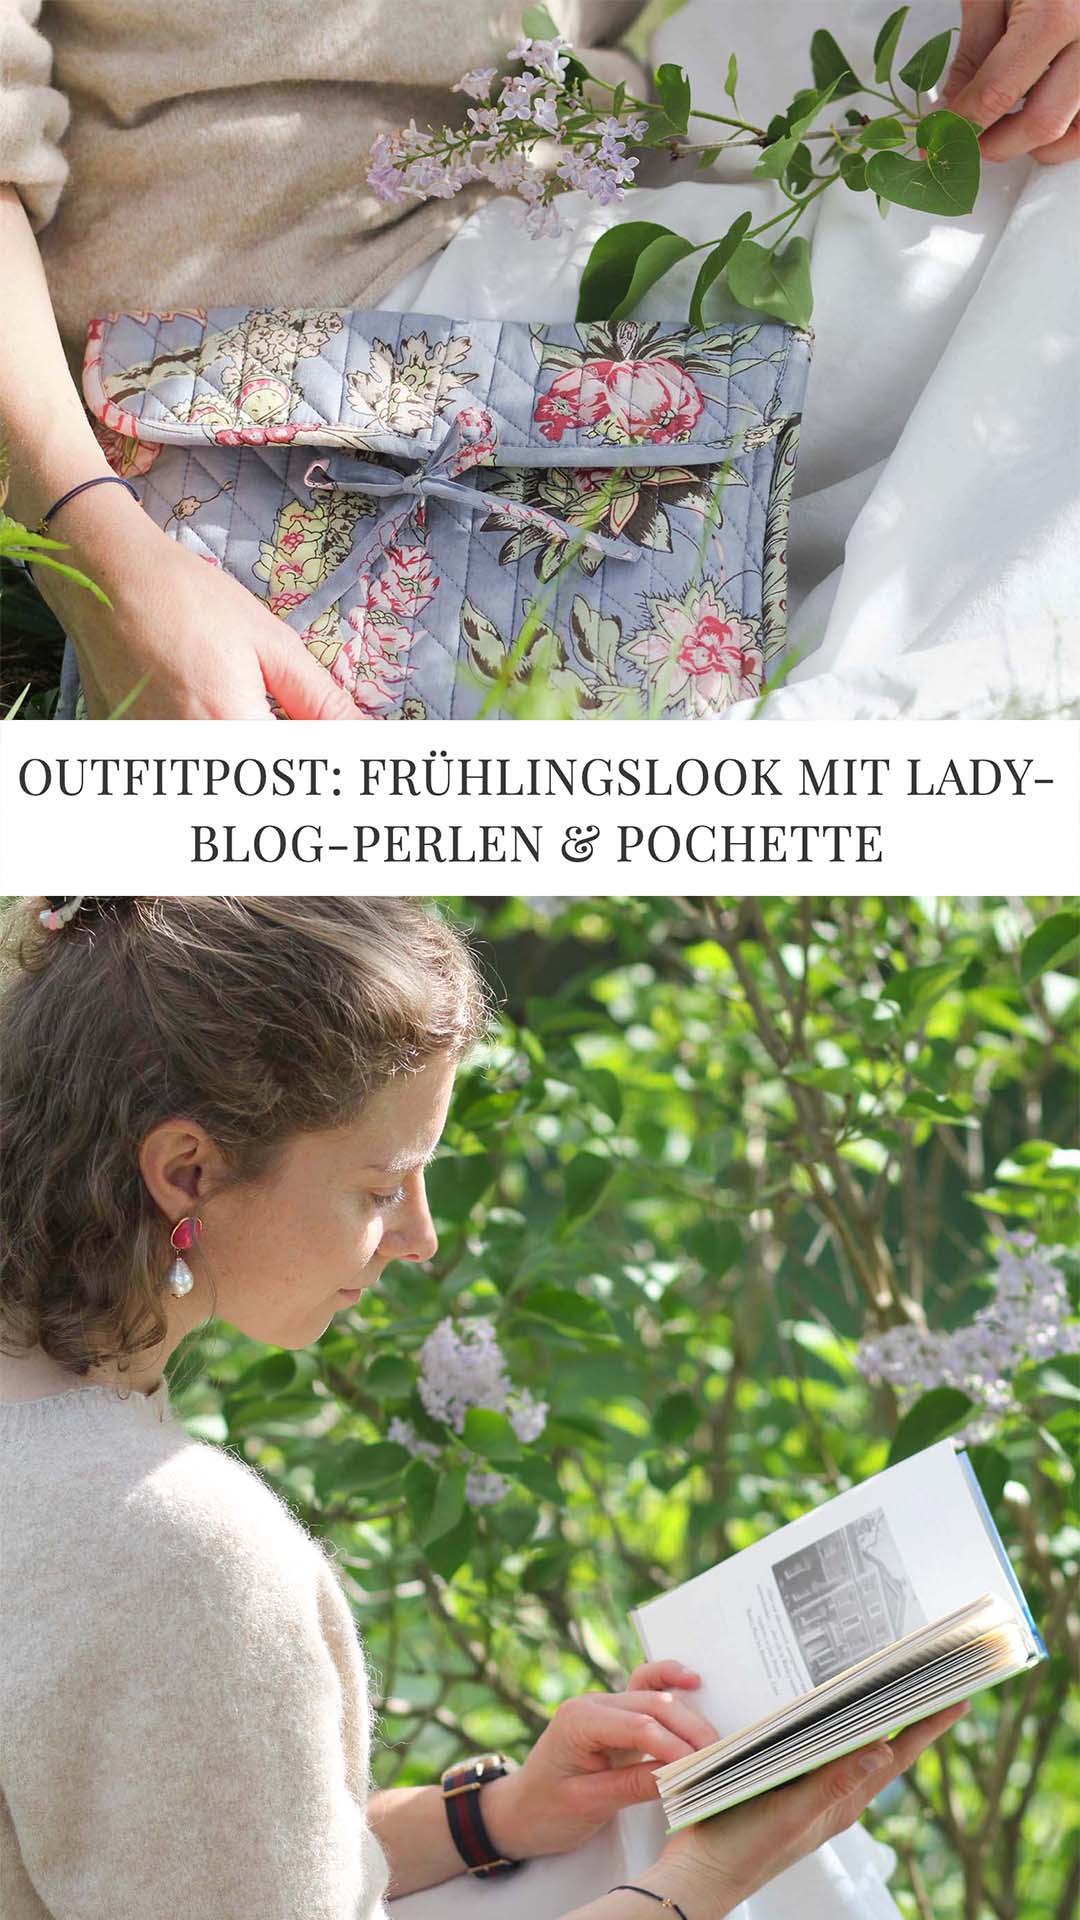 Lady-Blog Shop Ohrringe & Pochette